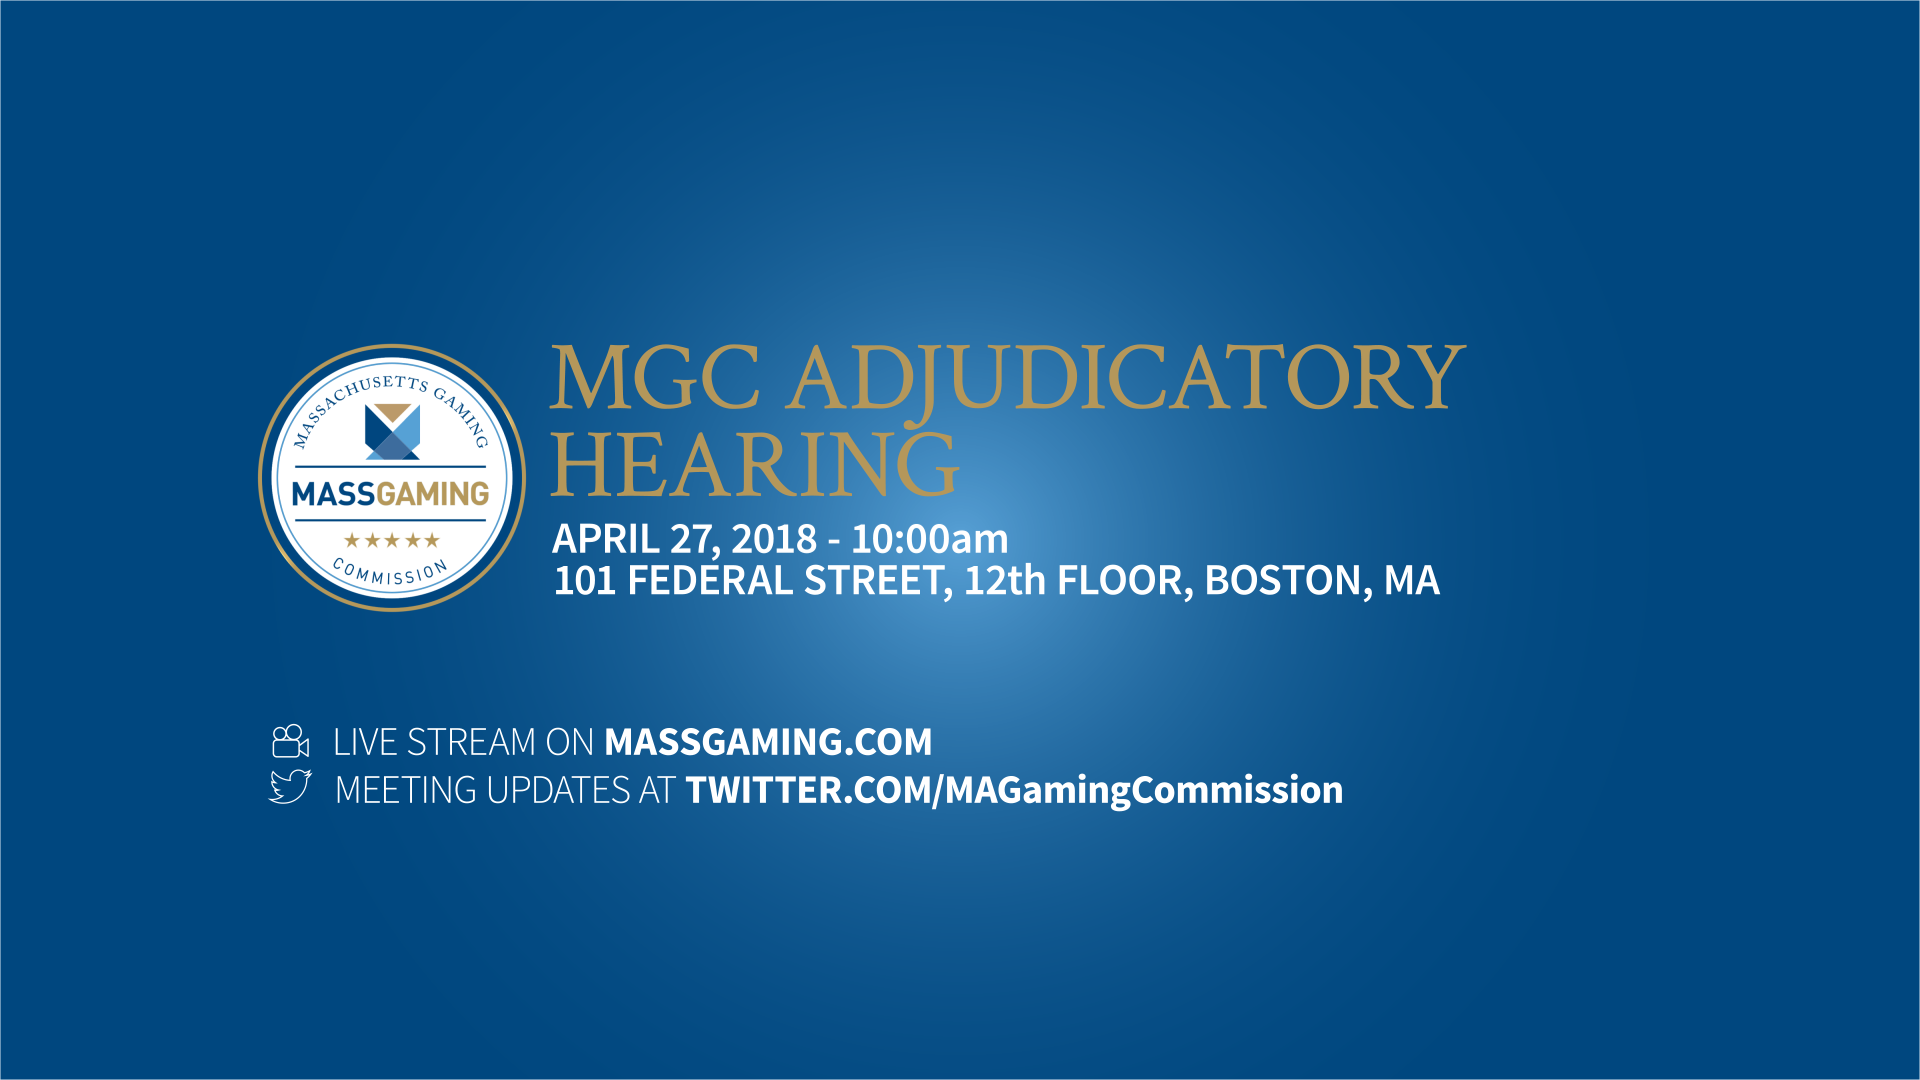 Adjudicatory Hearing Notification: MGC to Hold Adjudicatory Hearing